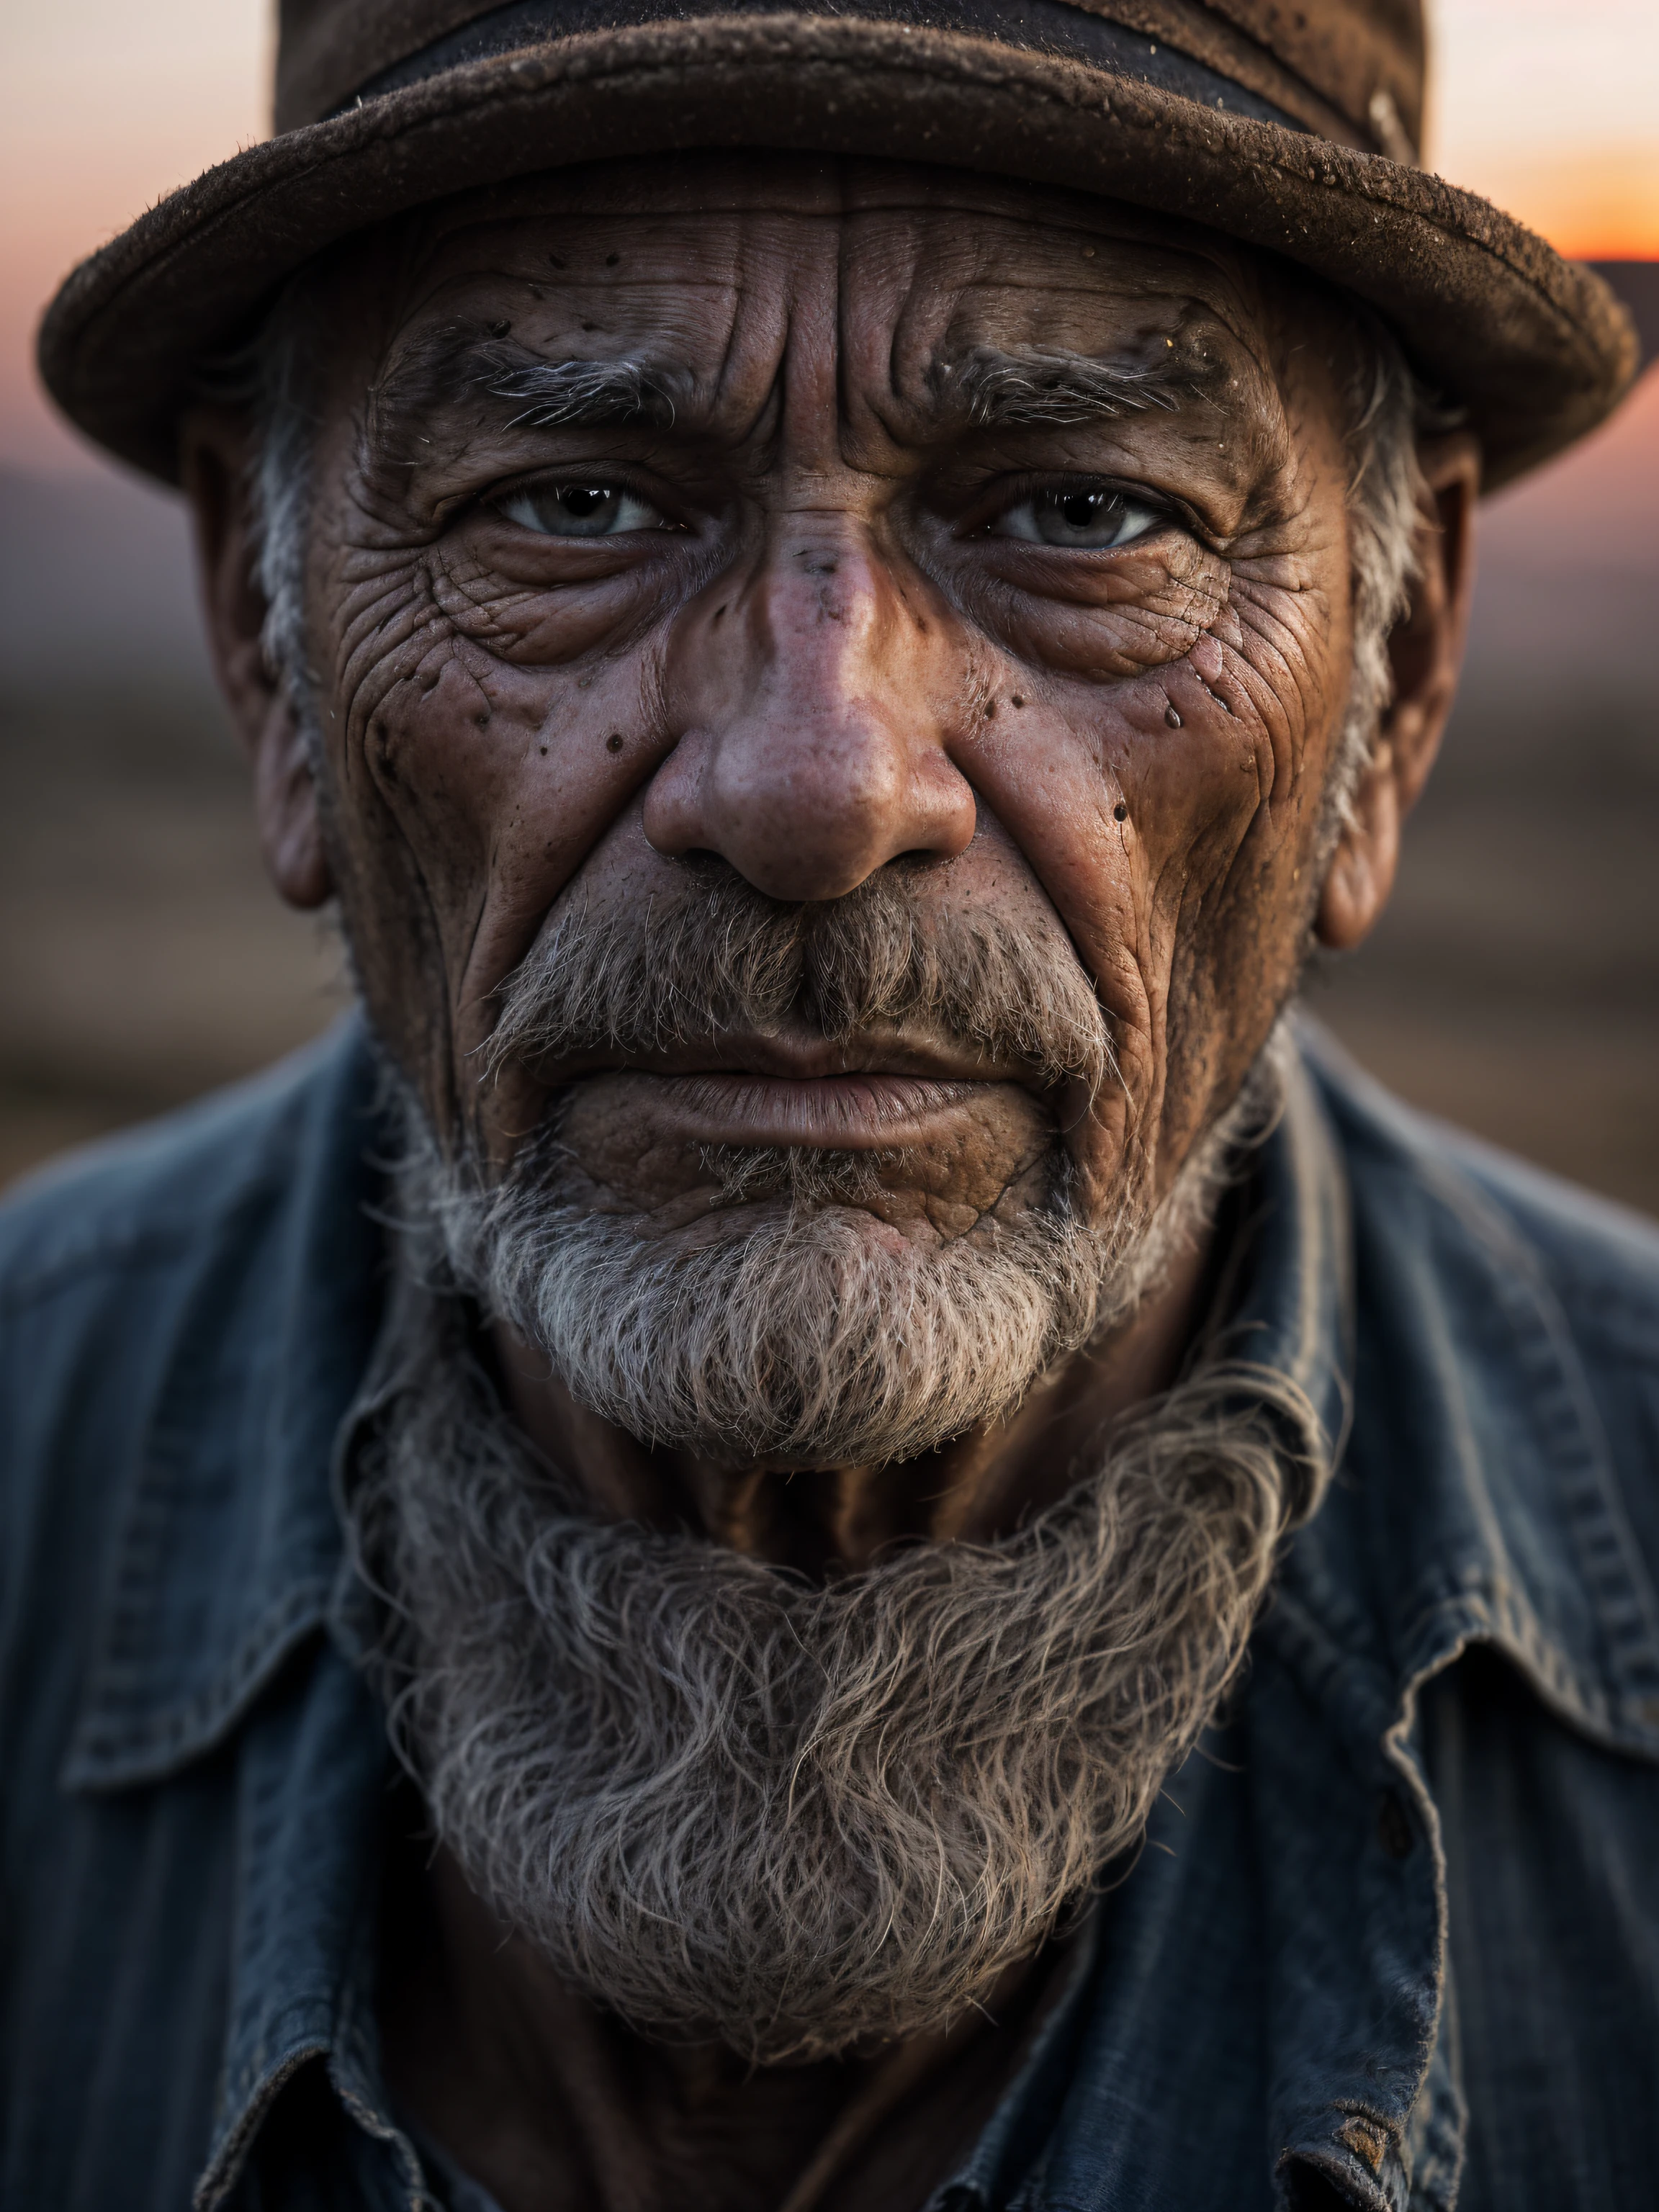 emotional 肖像画 photo of old man in rugged bluesman clothes, 顔, 視聴者を見る, 肖像画, (皮膚の毛穴:1.2), (ほくろ:0.8), (不完全な肌:1.1), 複雑な詳細, 鳥肌が立つ, flawless 顔, 映画のような, 暗い, 落ち着いた色, 雰囲気, ((マクロレンズ)), 日没